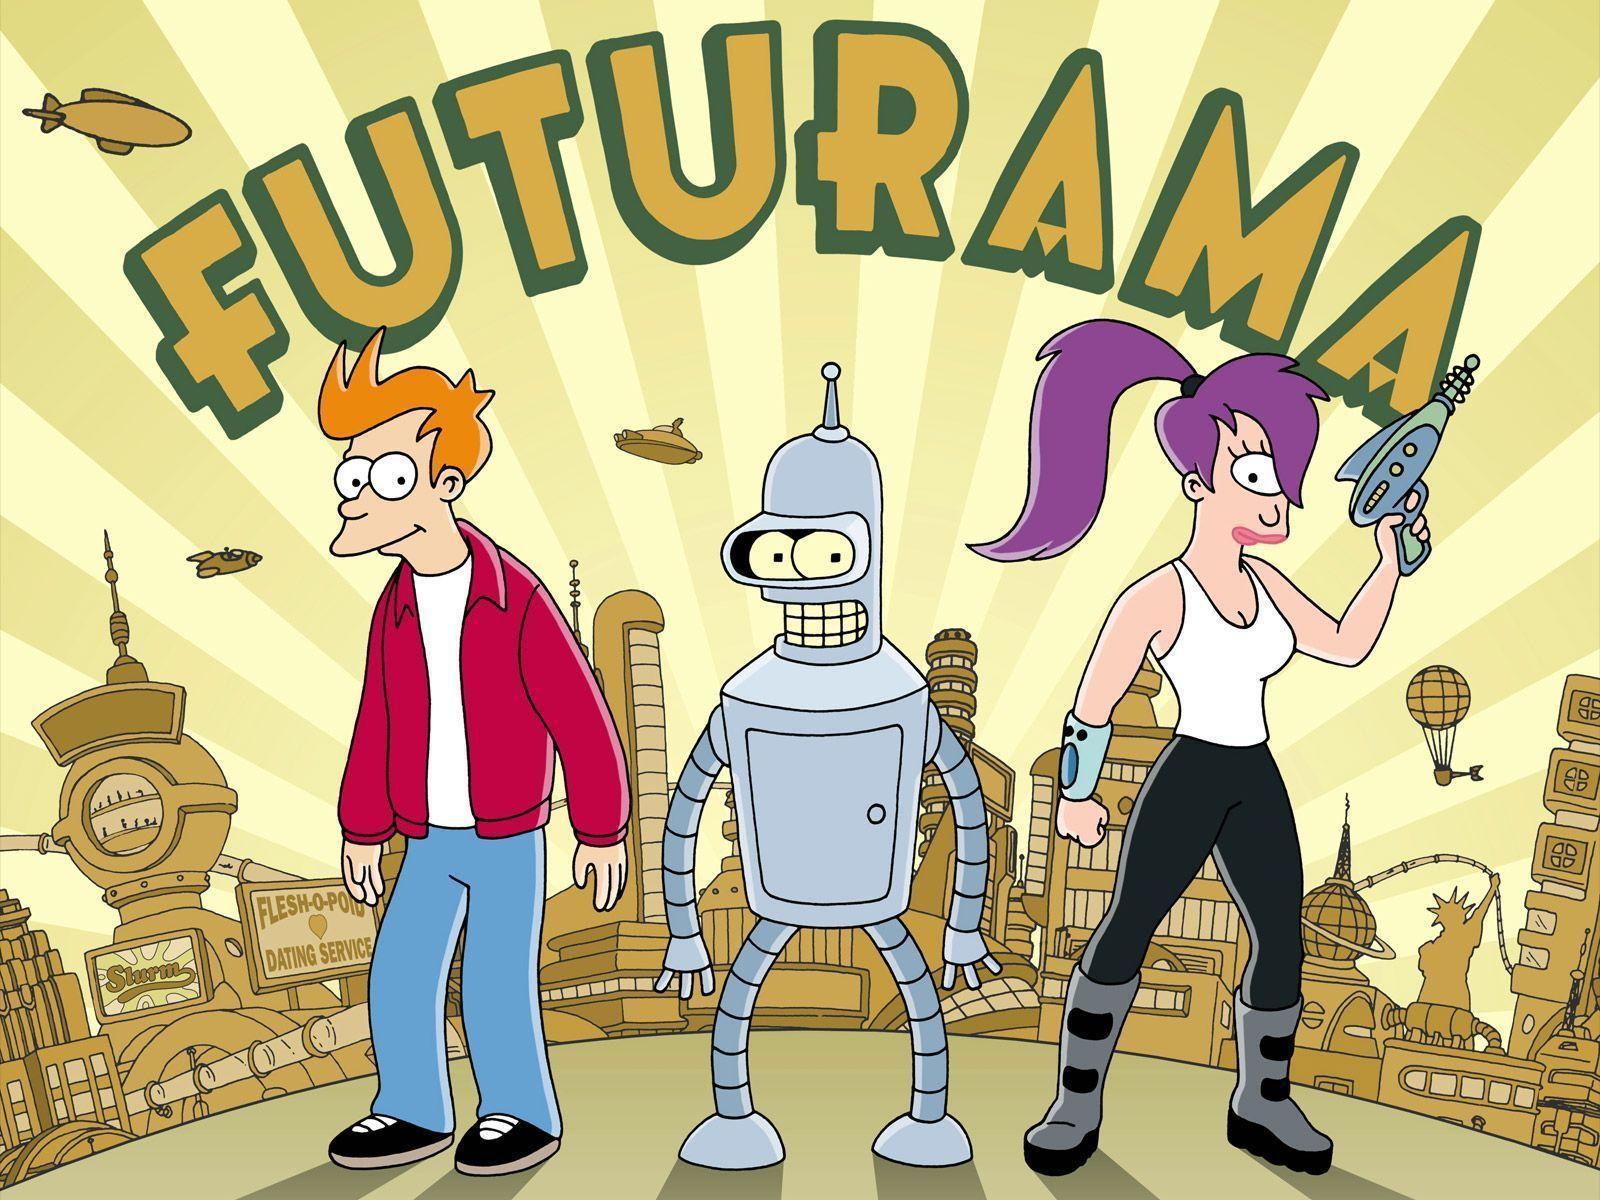 Futurama Theme Song. Movie Theme Songs & TV Soundtracks